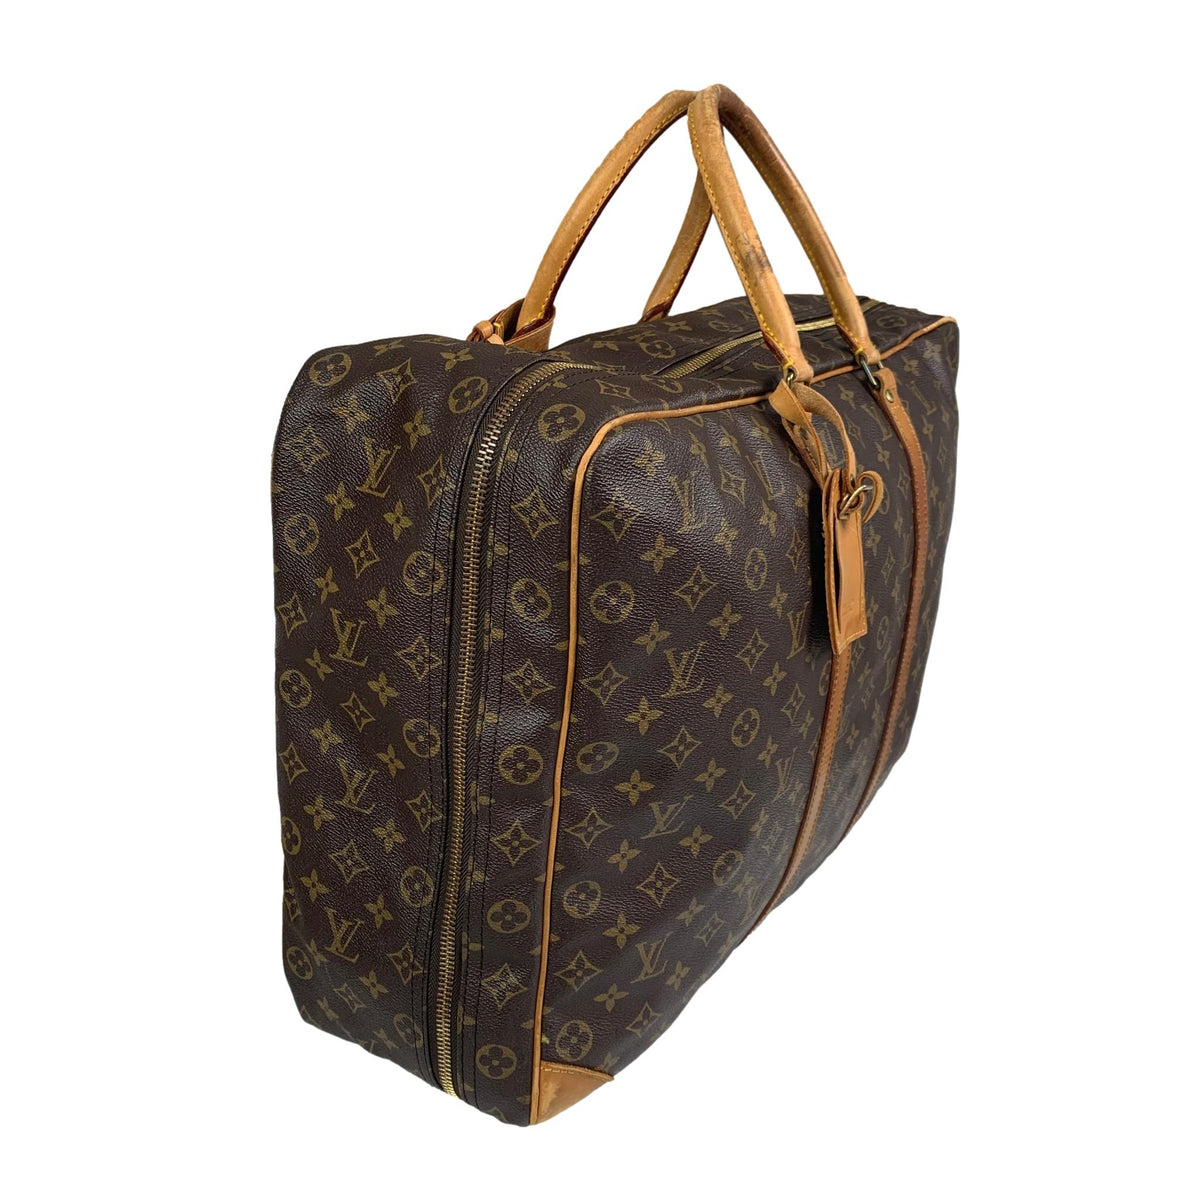 Louis Vuitton Monogram Sirius Suitcase 50cm Luggage Weekender